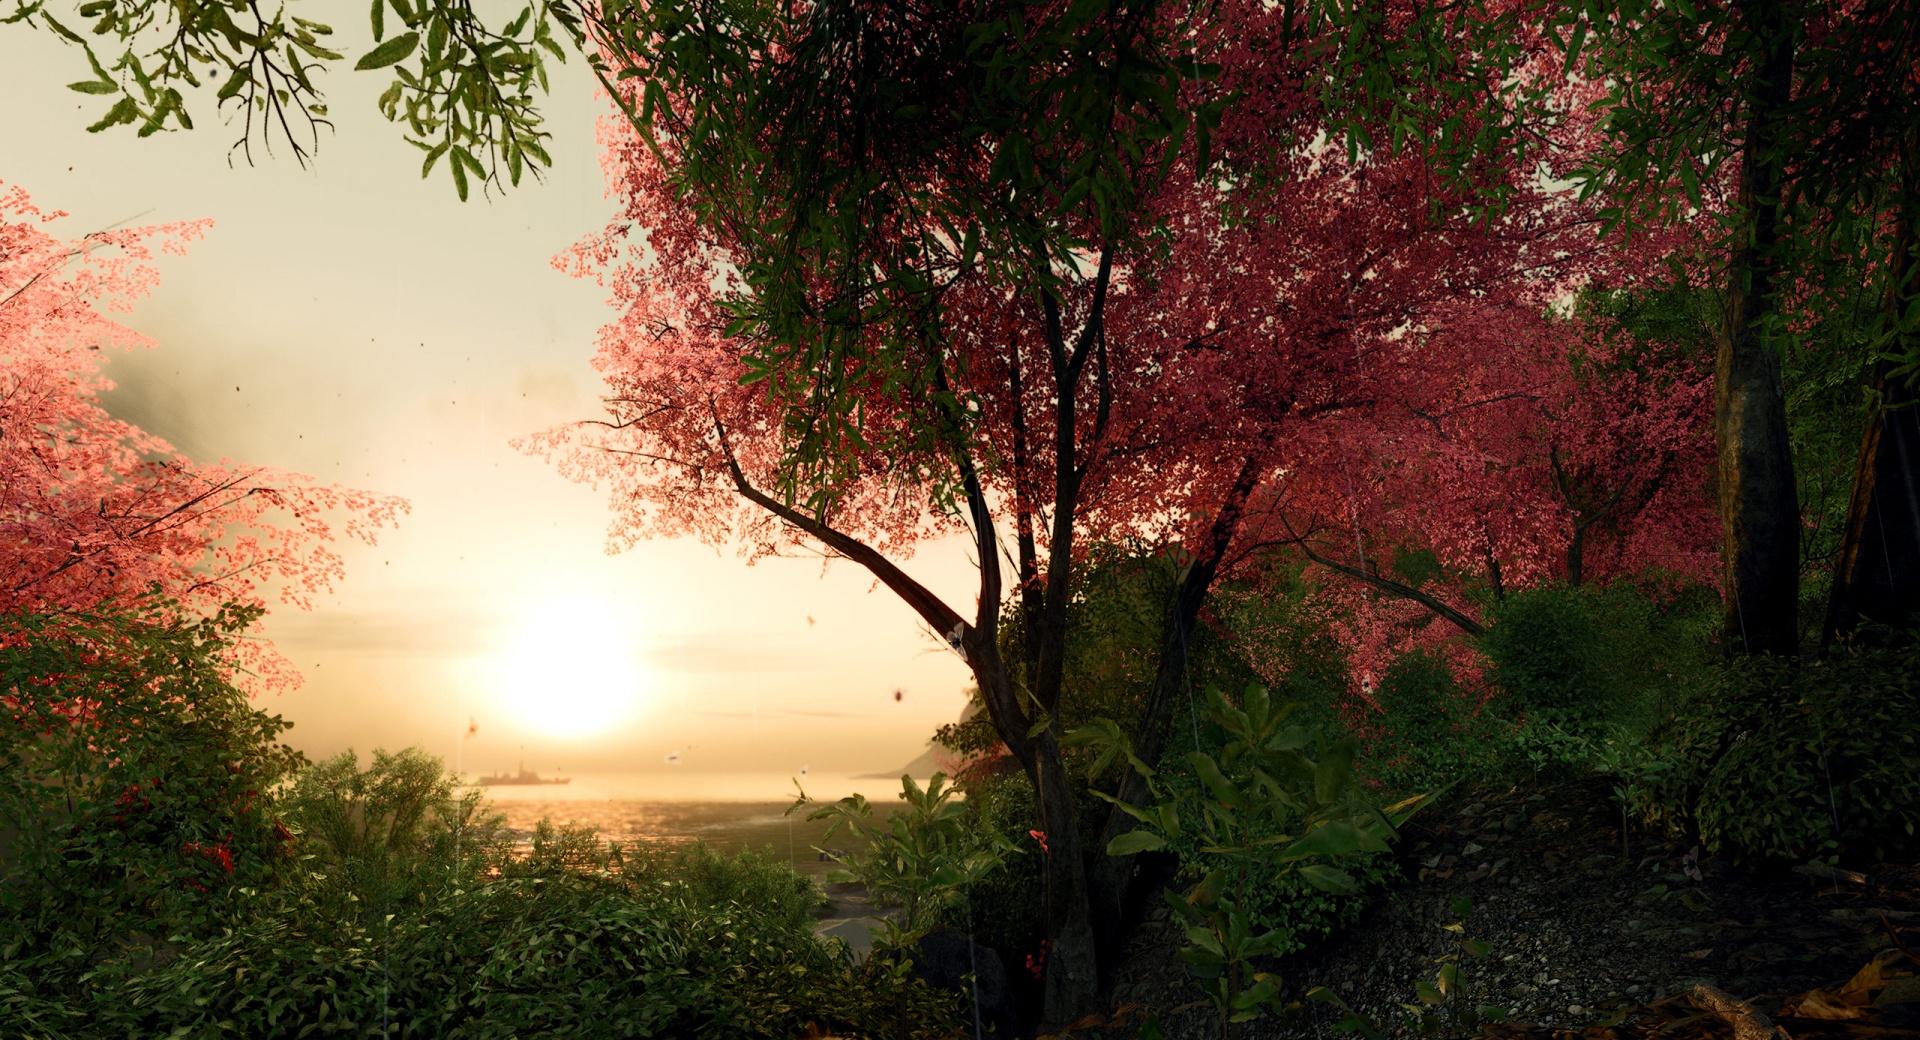 Crysis Video Game Sakura at 1600 x 1200 size wallpapers HD quality